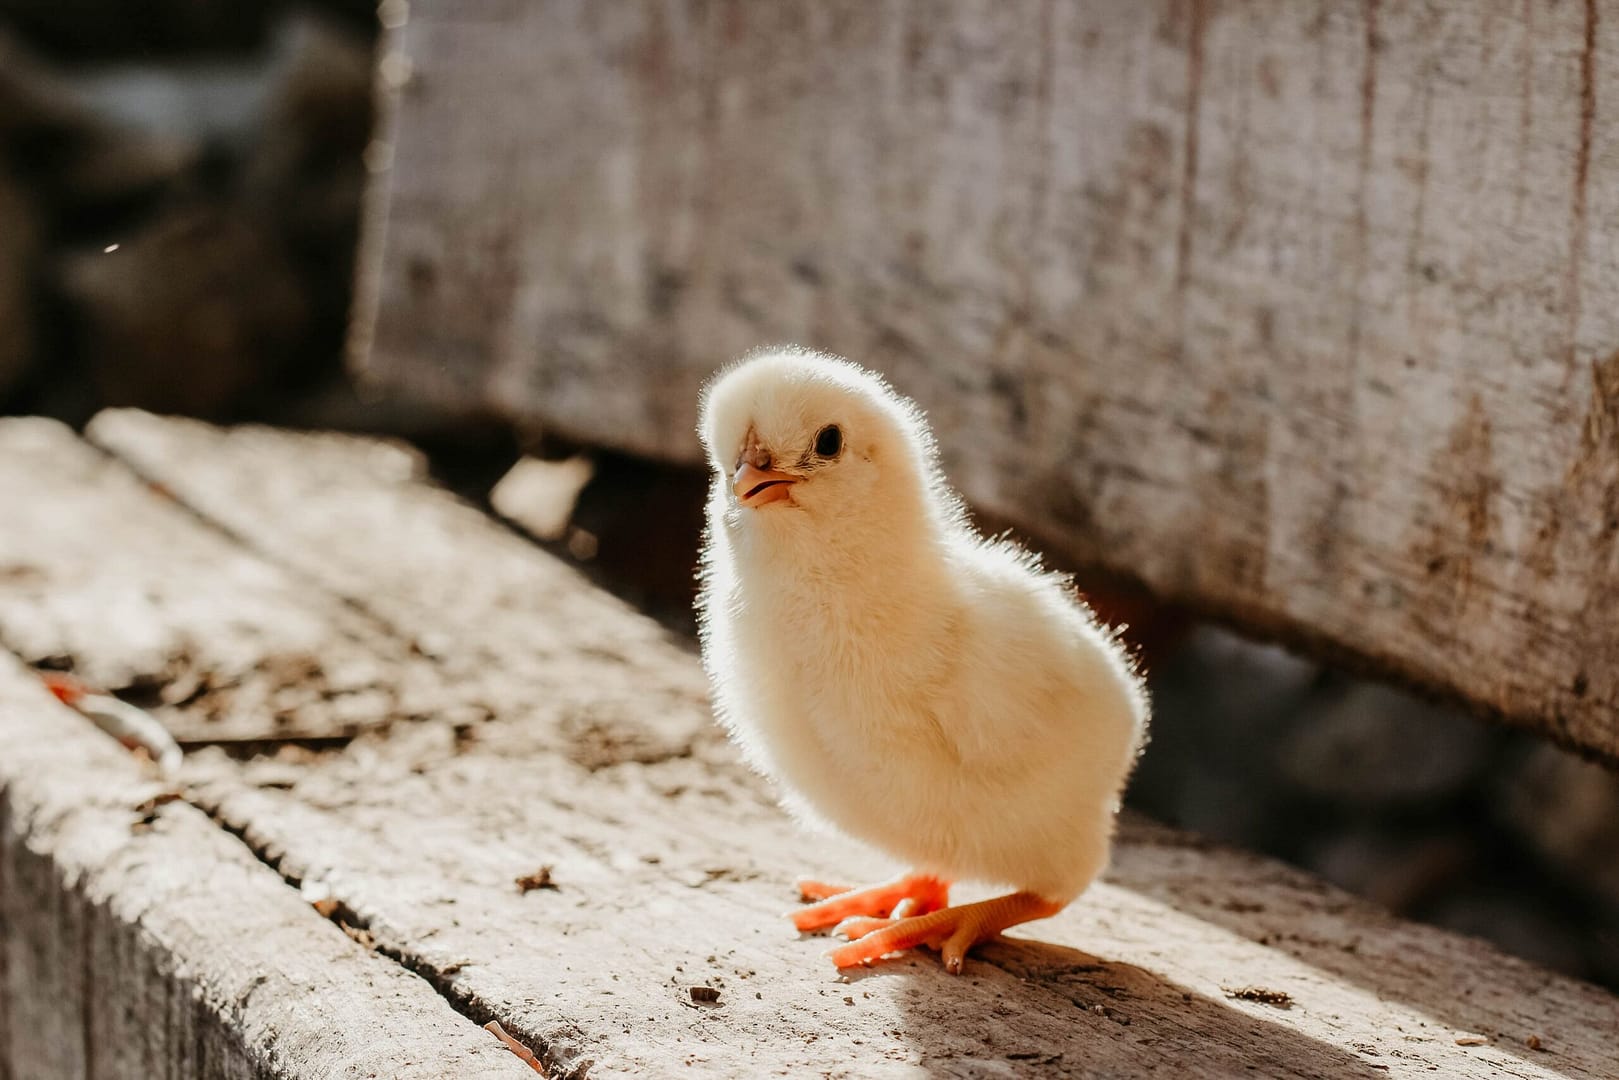 A chick